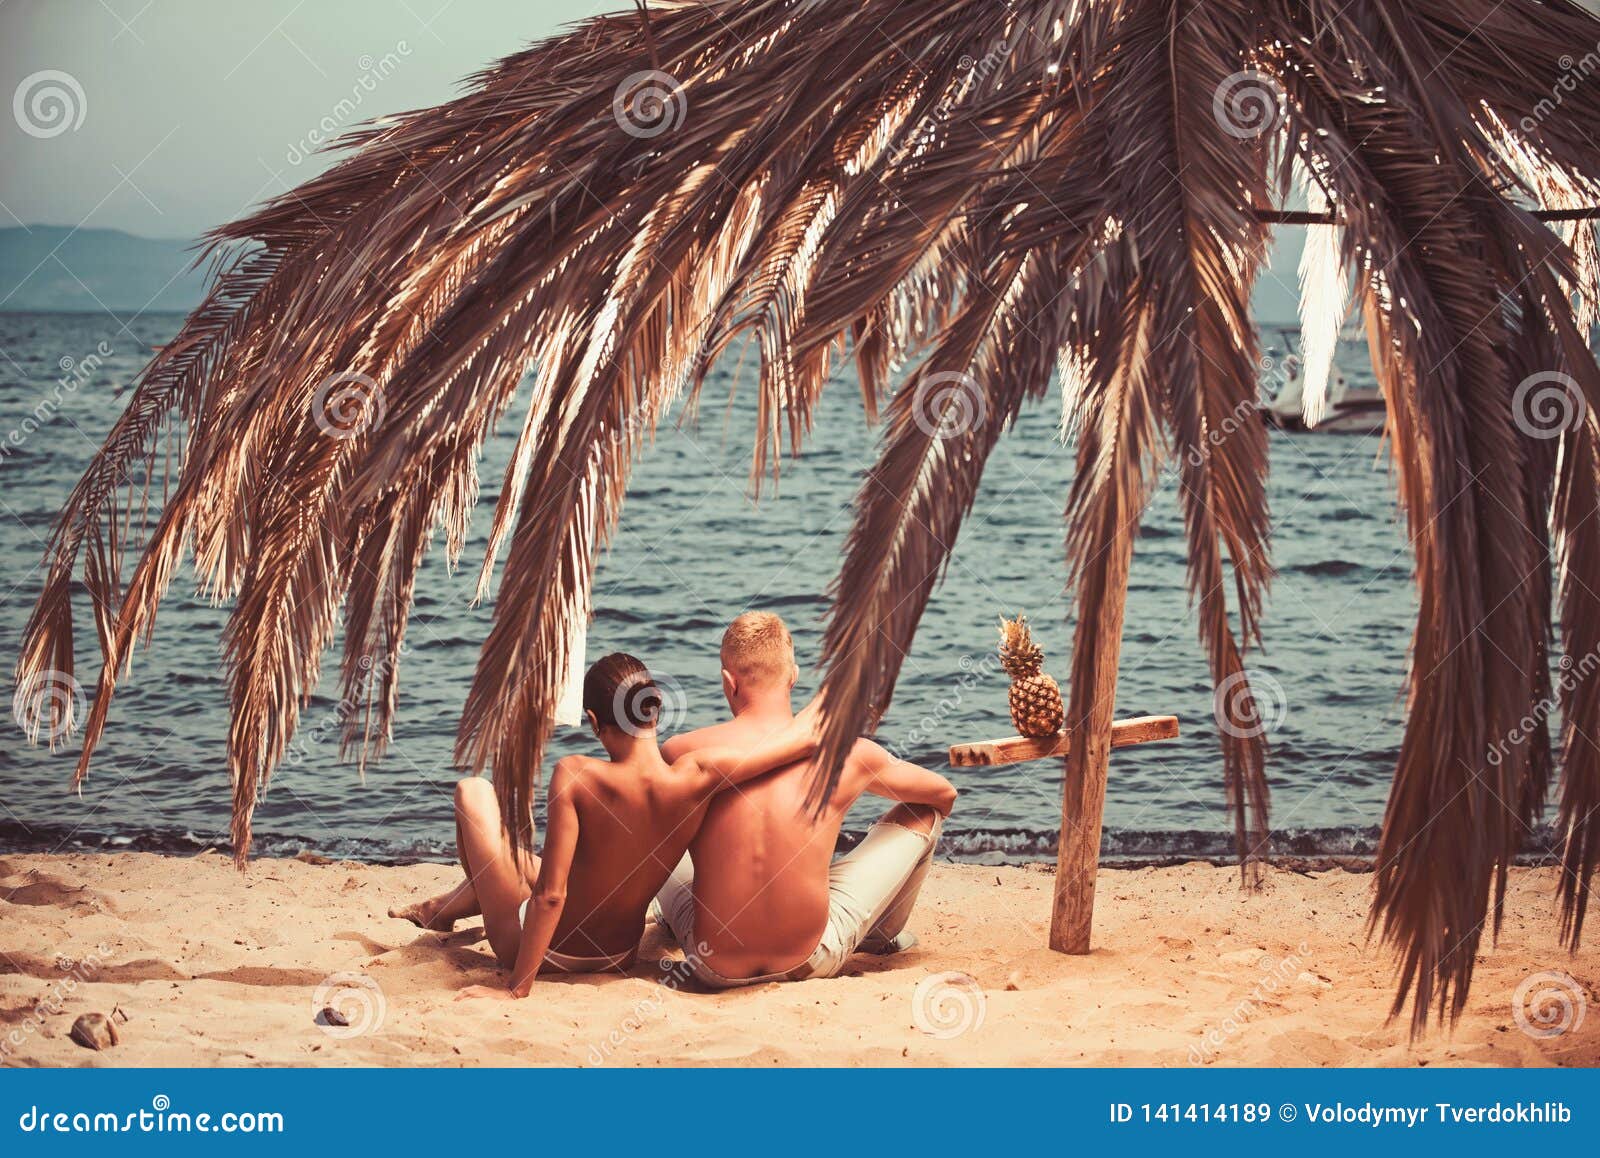 Nude Beach Lover Stock Photos pic photo